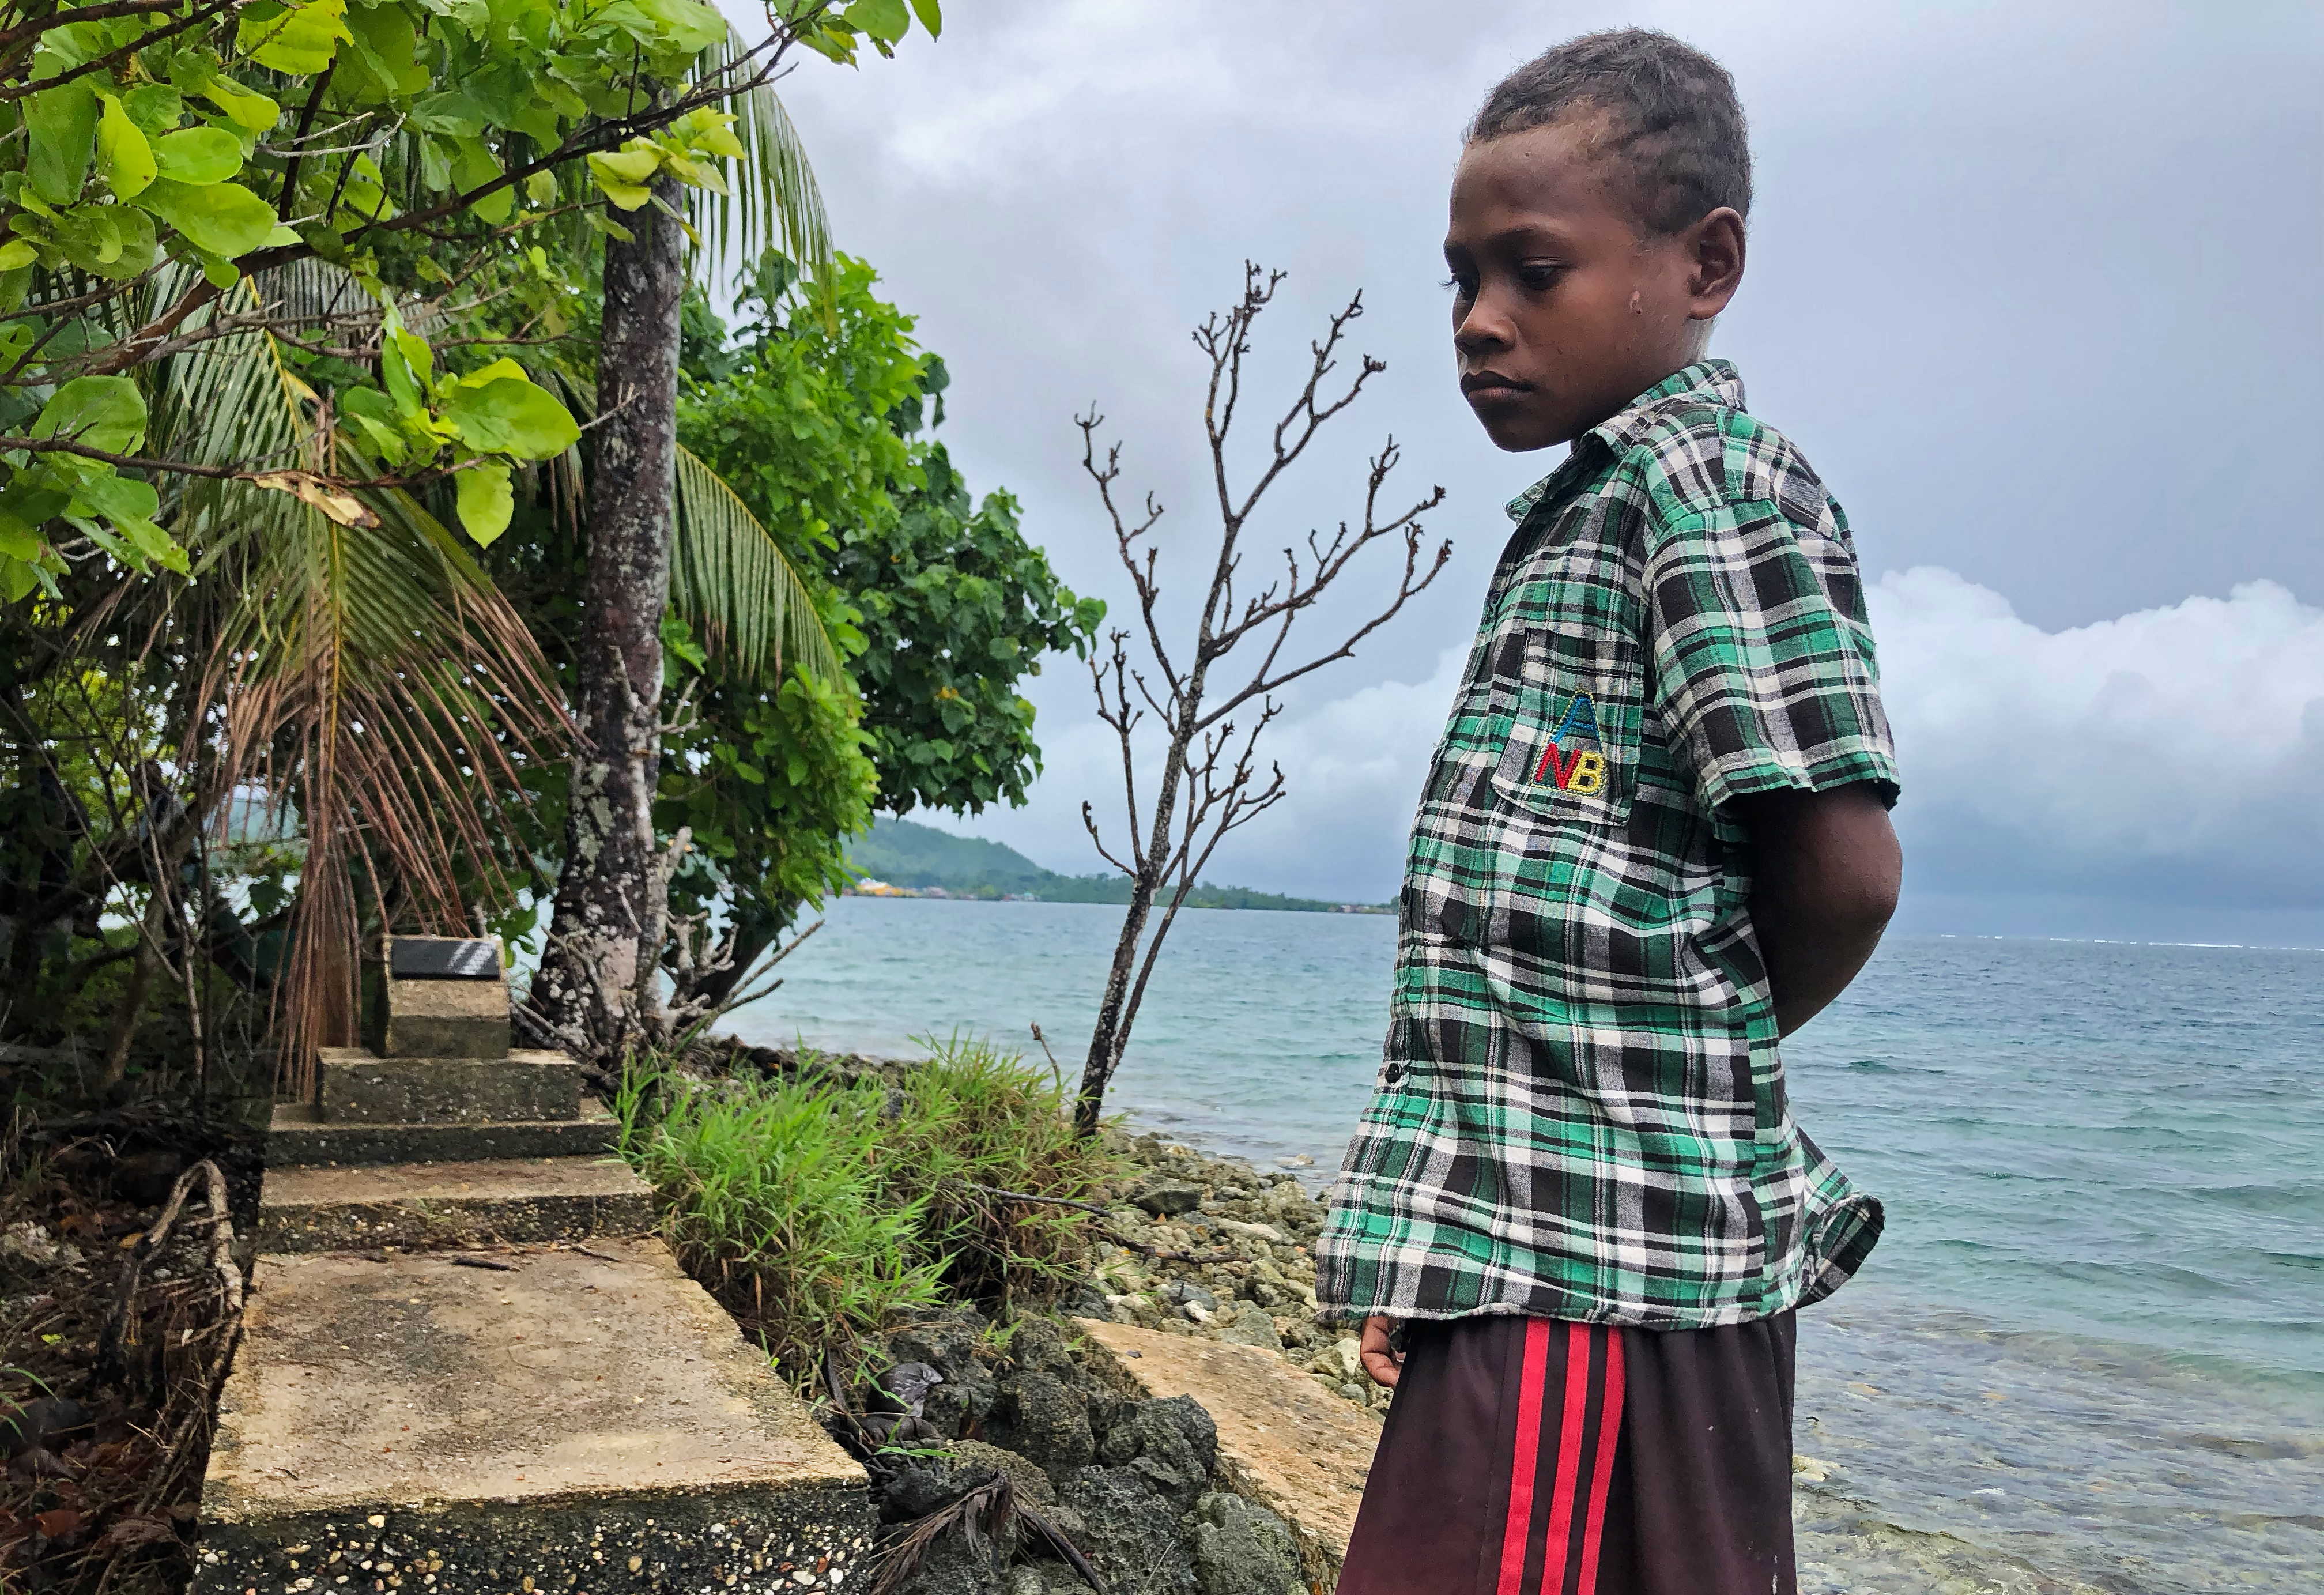 A boy stares sadly at the eroding island his family had to abandon